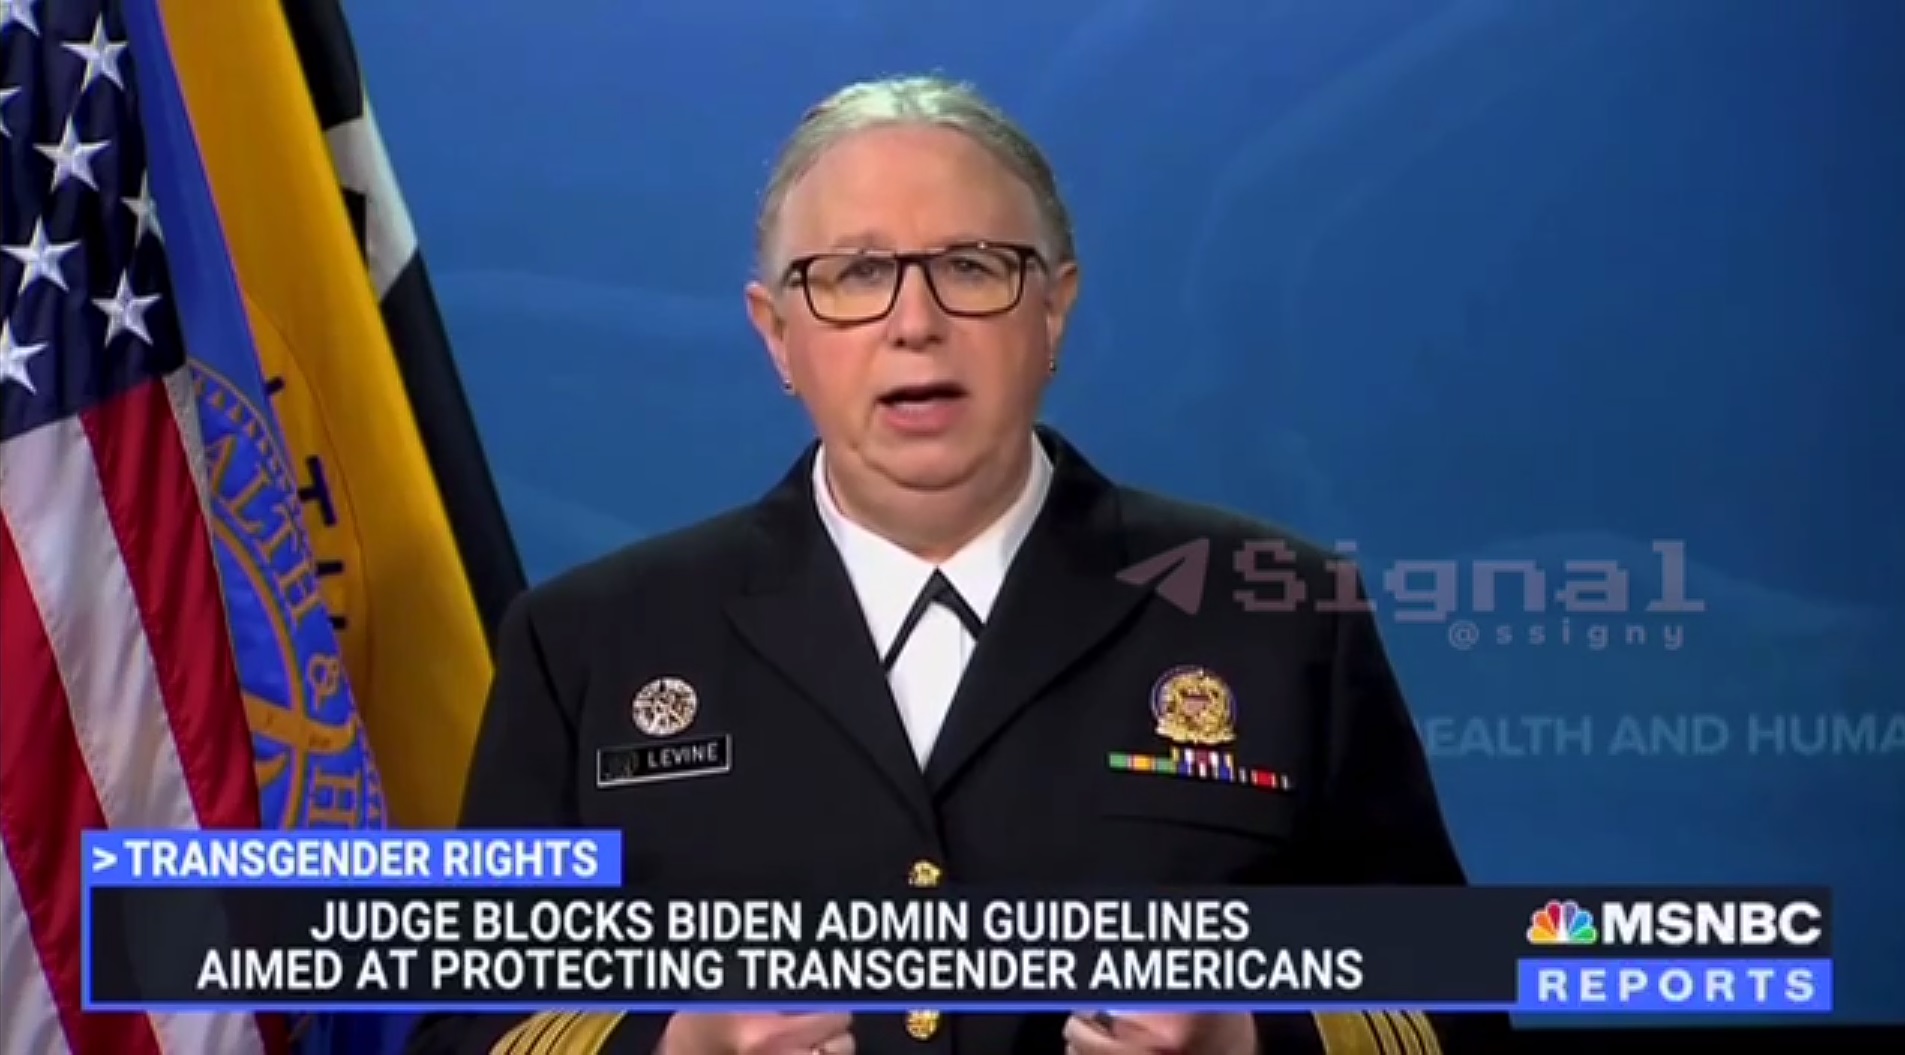 Байден объявил трансгендеров. Рейчел Левин Адмирал. Министр обороны США трансгендер. Рейчел Левин министр здравоохранения США.